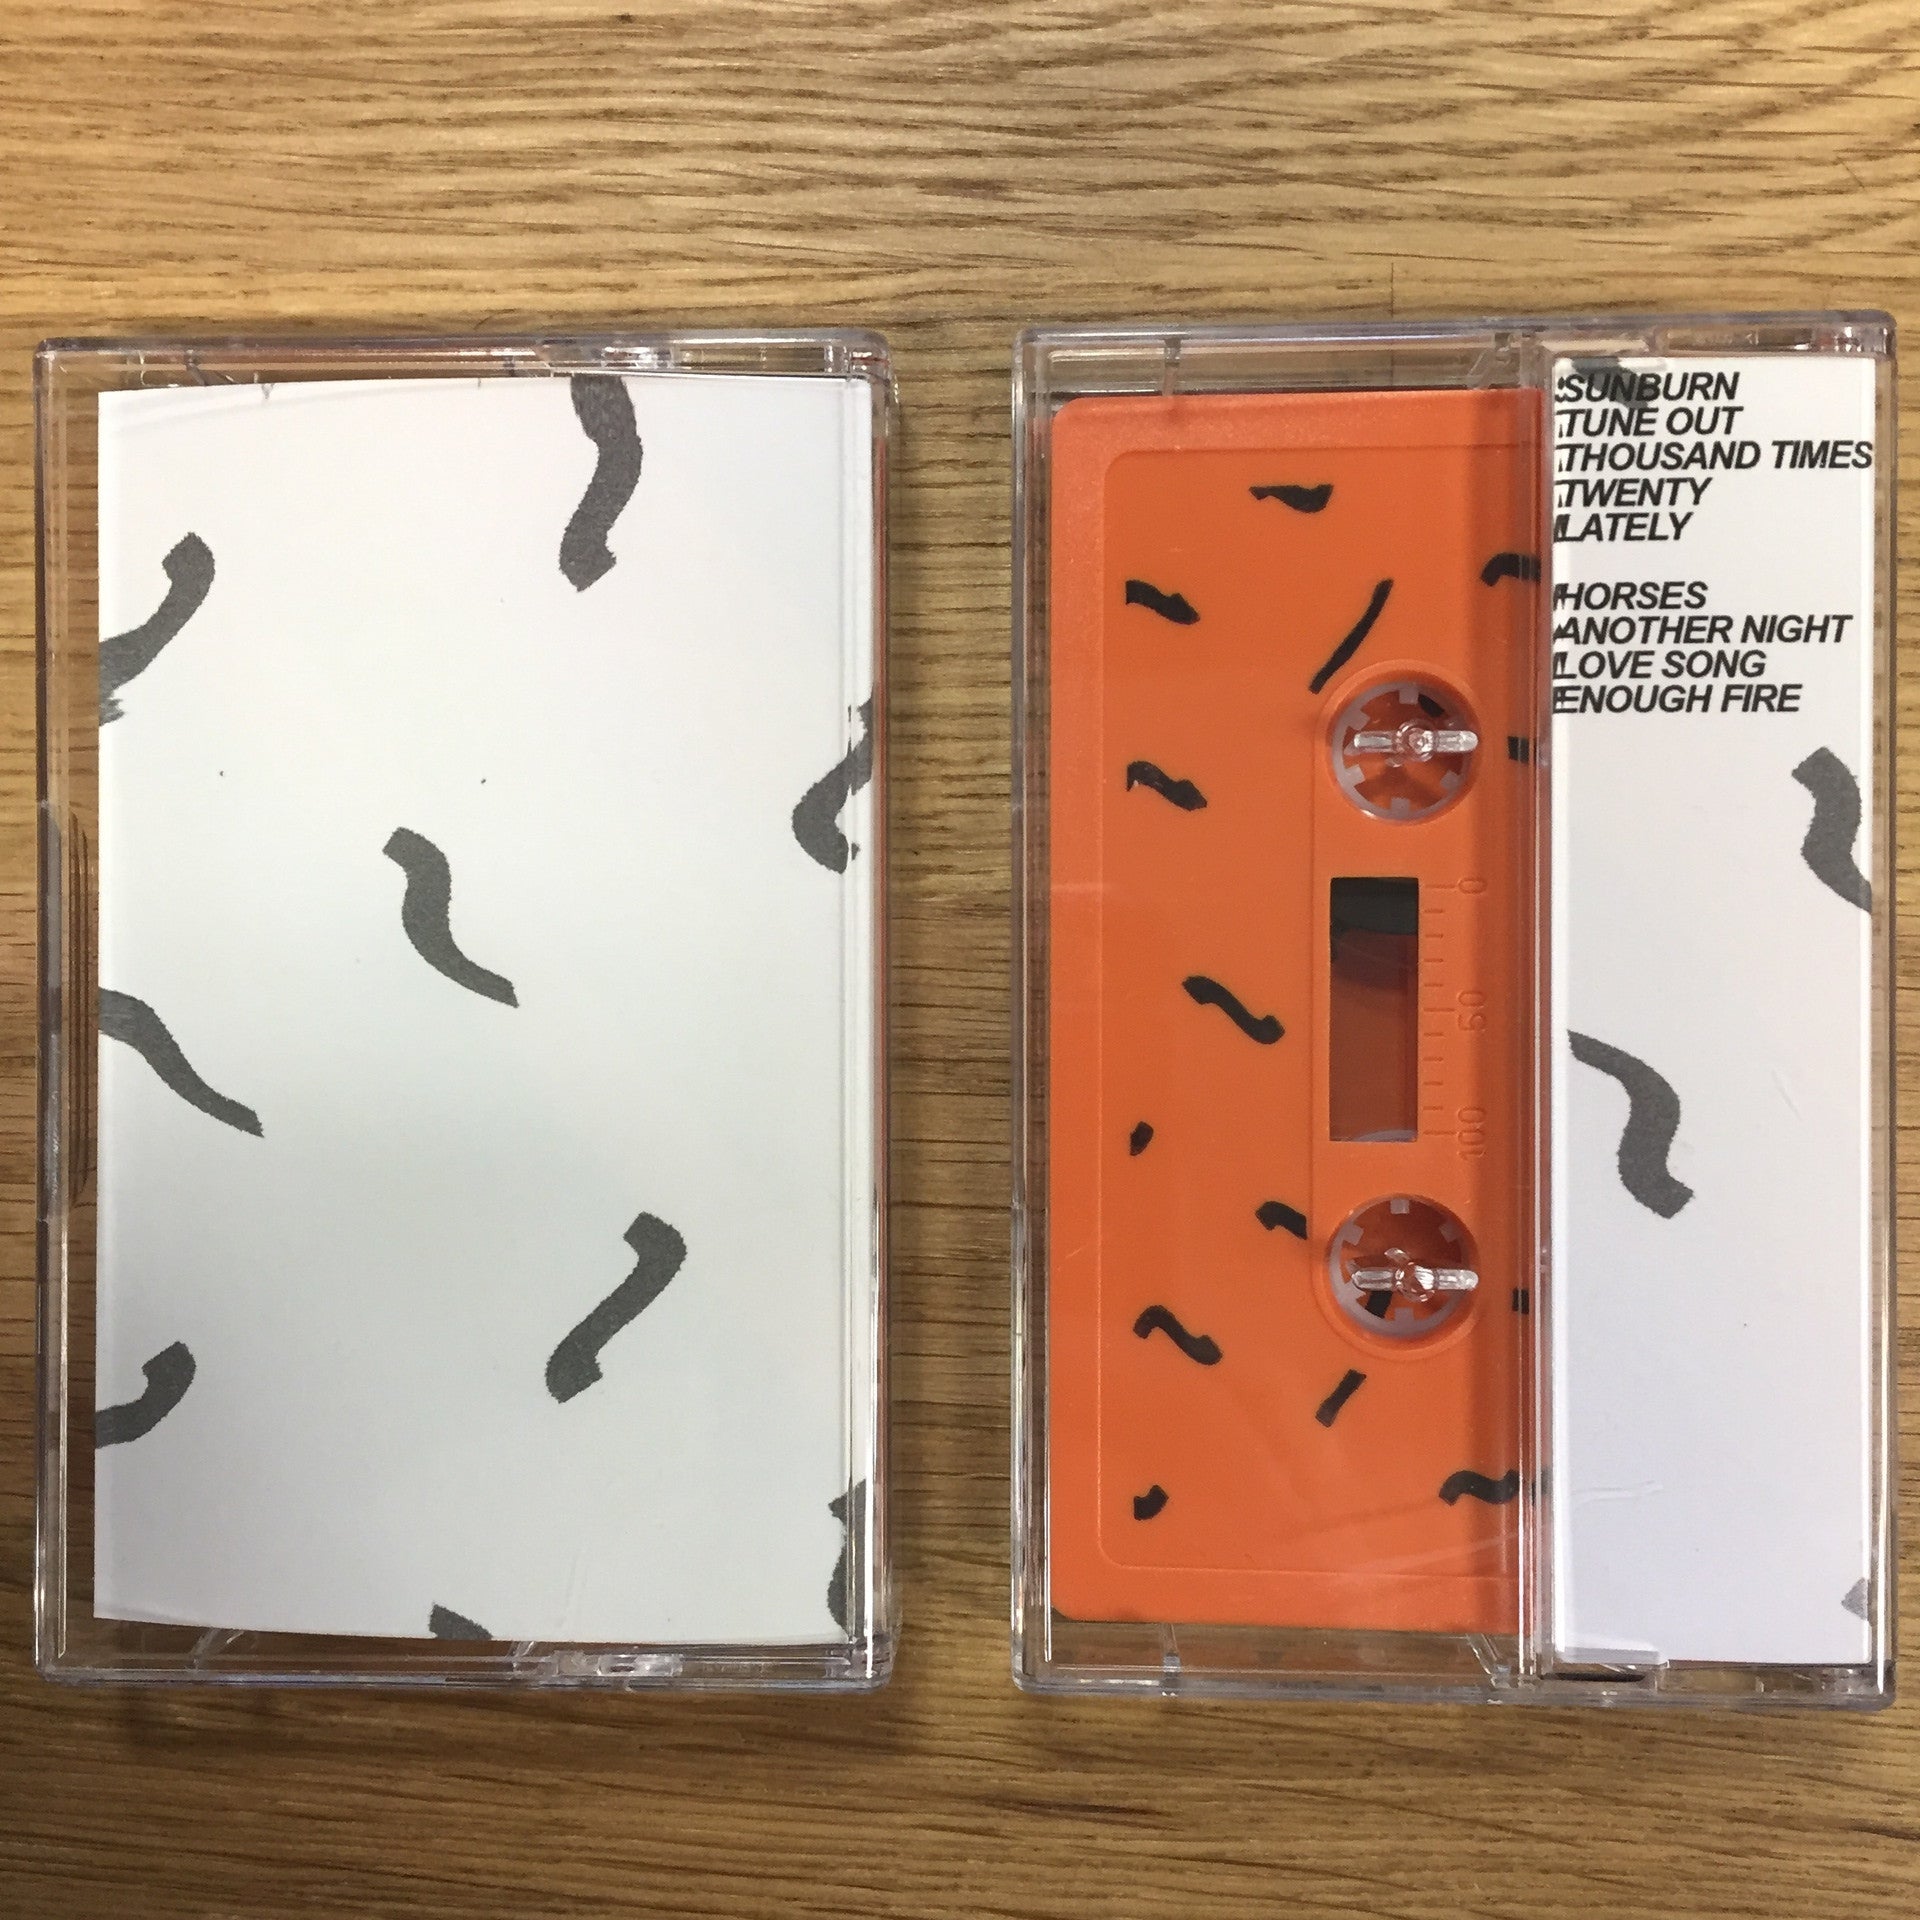 Dehd - S/T - New Cassette Tape - 2016 Maximum Pelt Orange Tape (Limited to 100!) - Chicago, IL Post-Punk / Garage / Lo-Fi